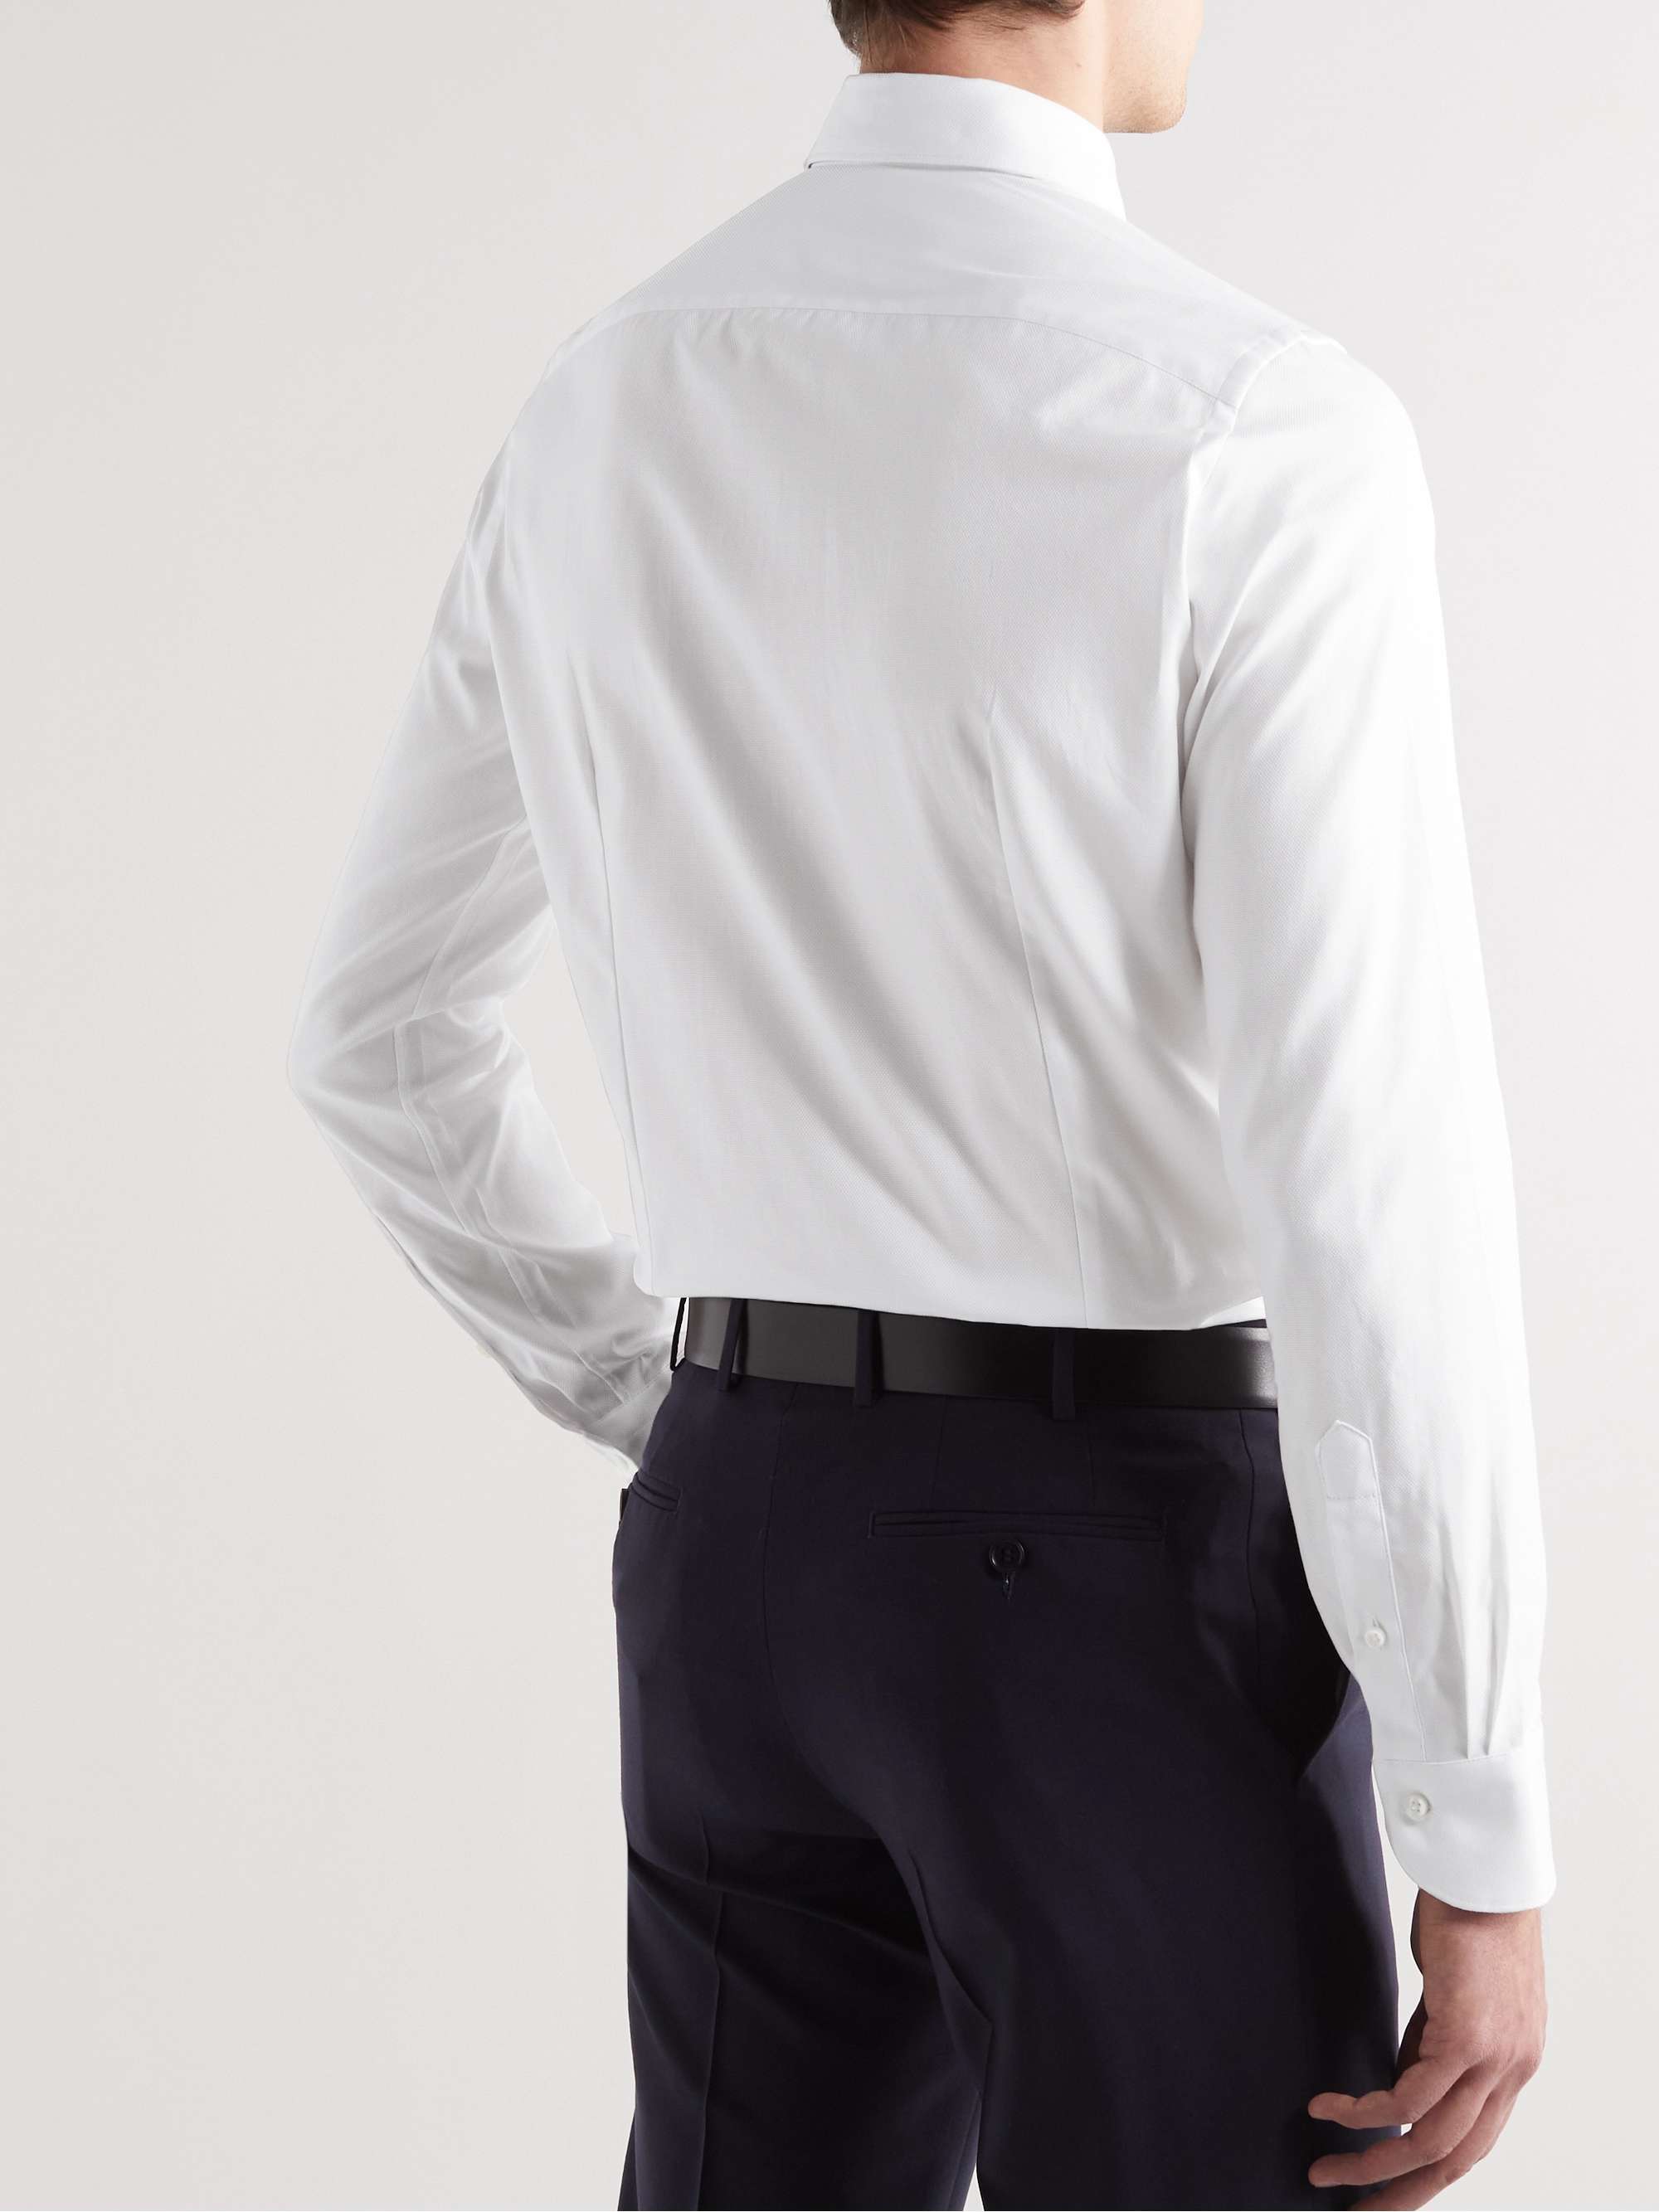 CANALI Slim-Fit Textured-Cotton Shirt